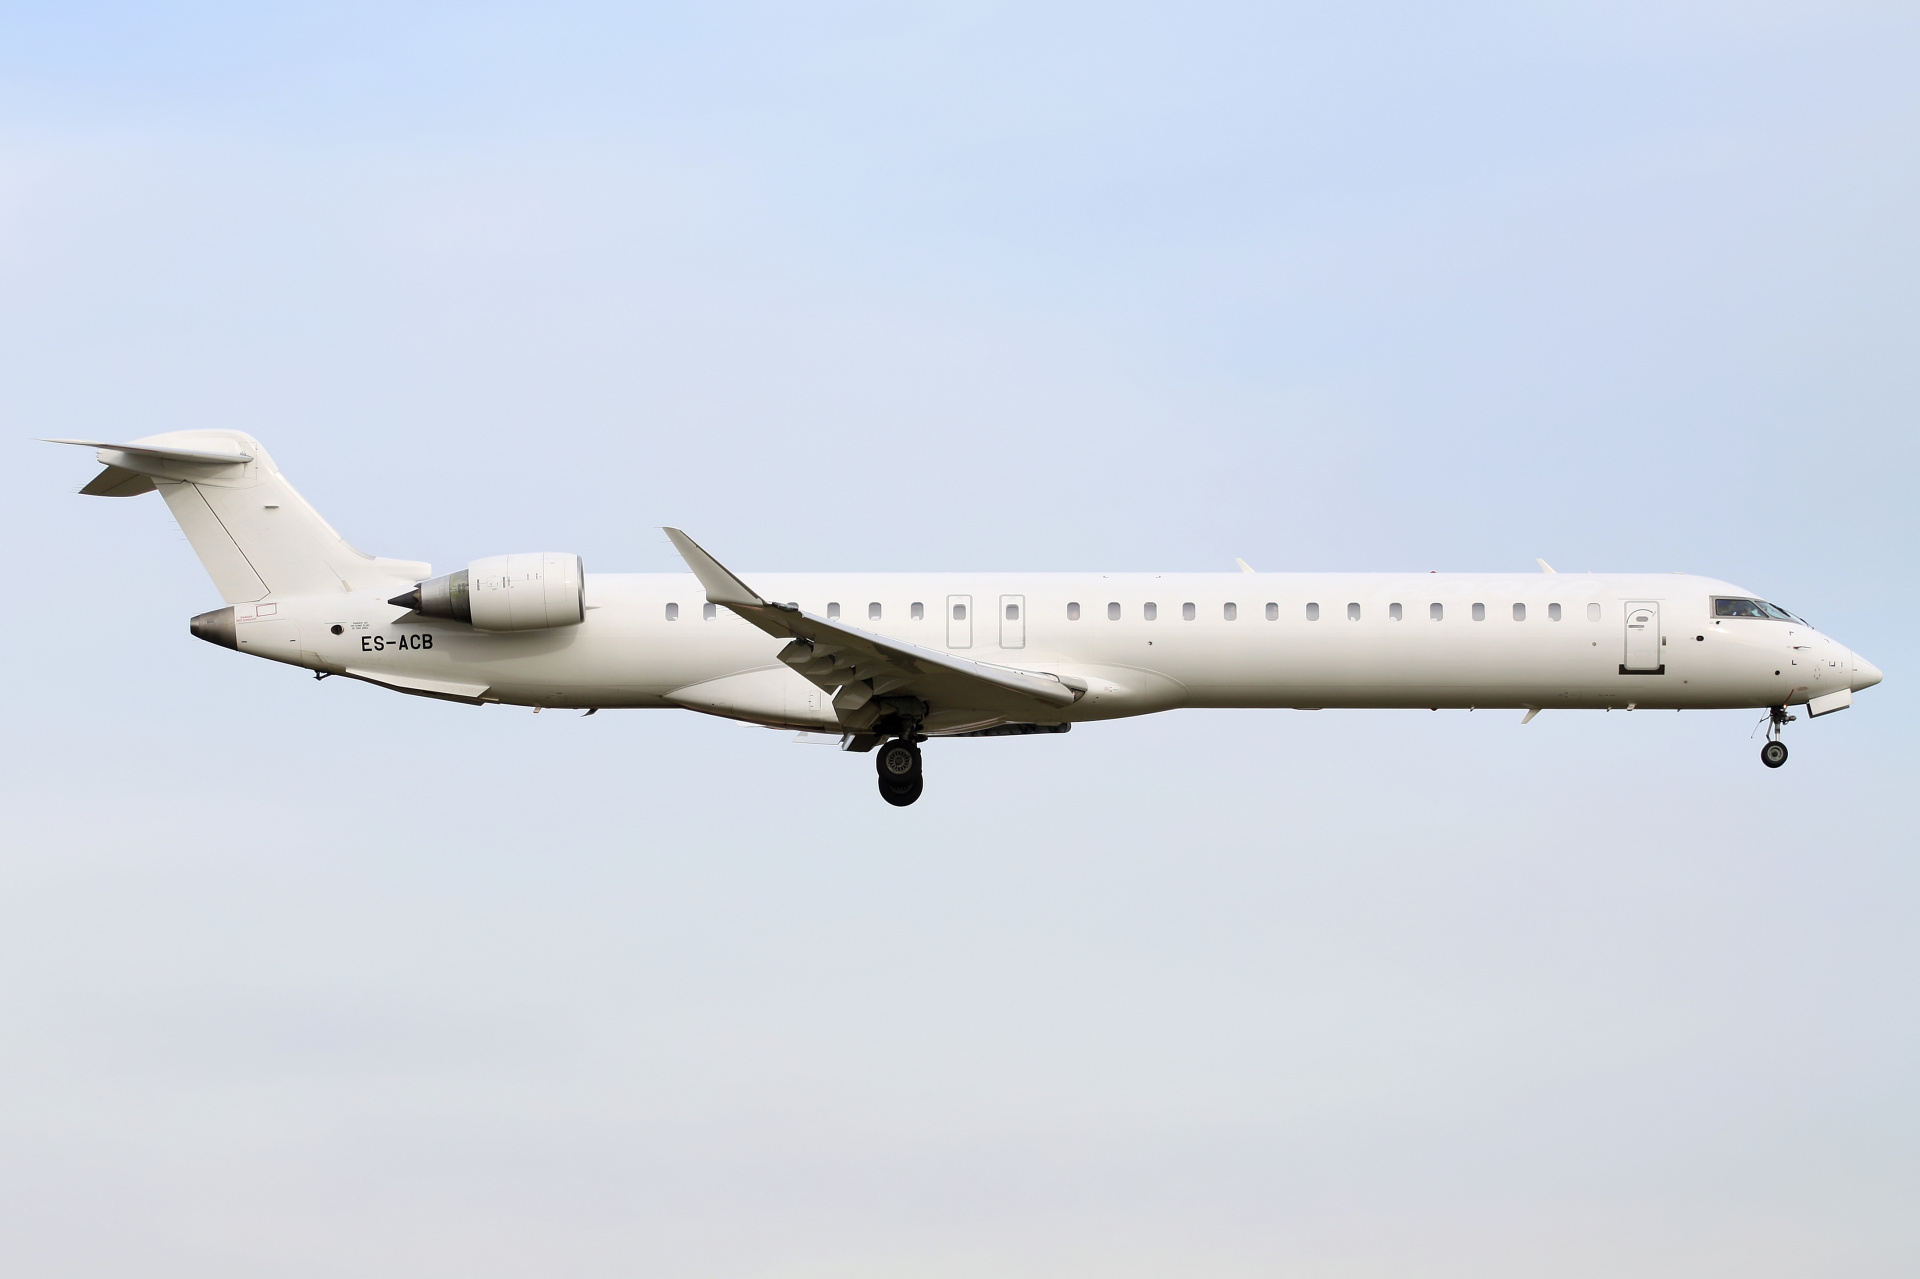 ES-ACB (no livery) (Aircraft » EPWA Spotting » Mitsubishi Regional Jet » CRJ-900 » Nordica)